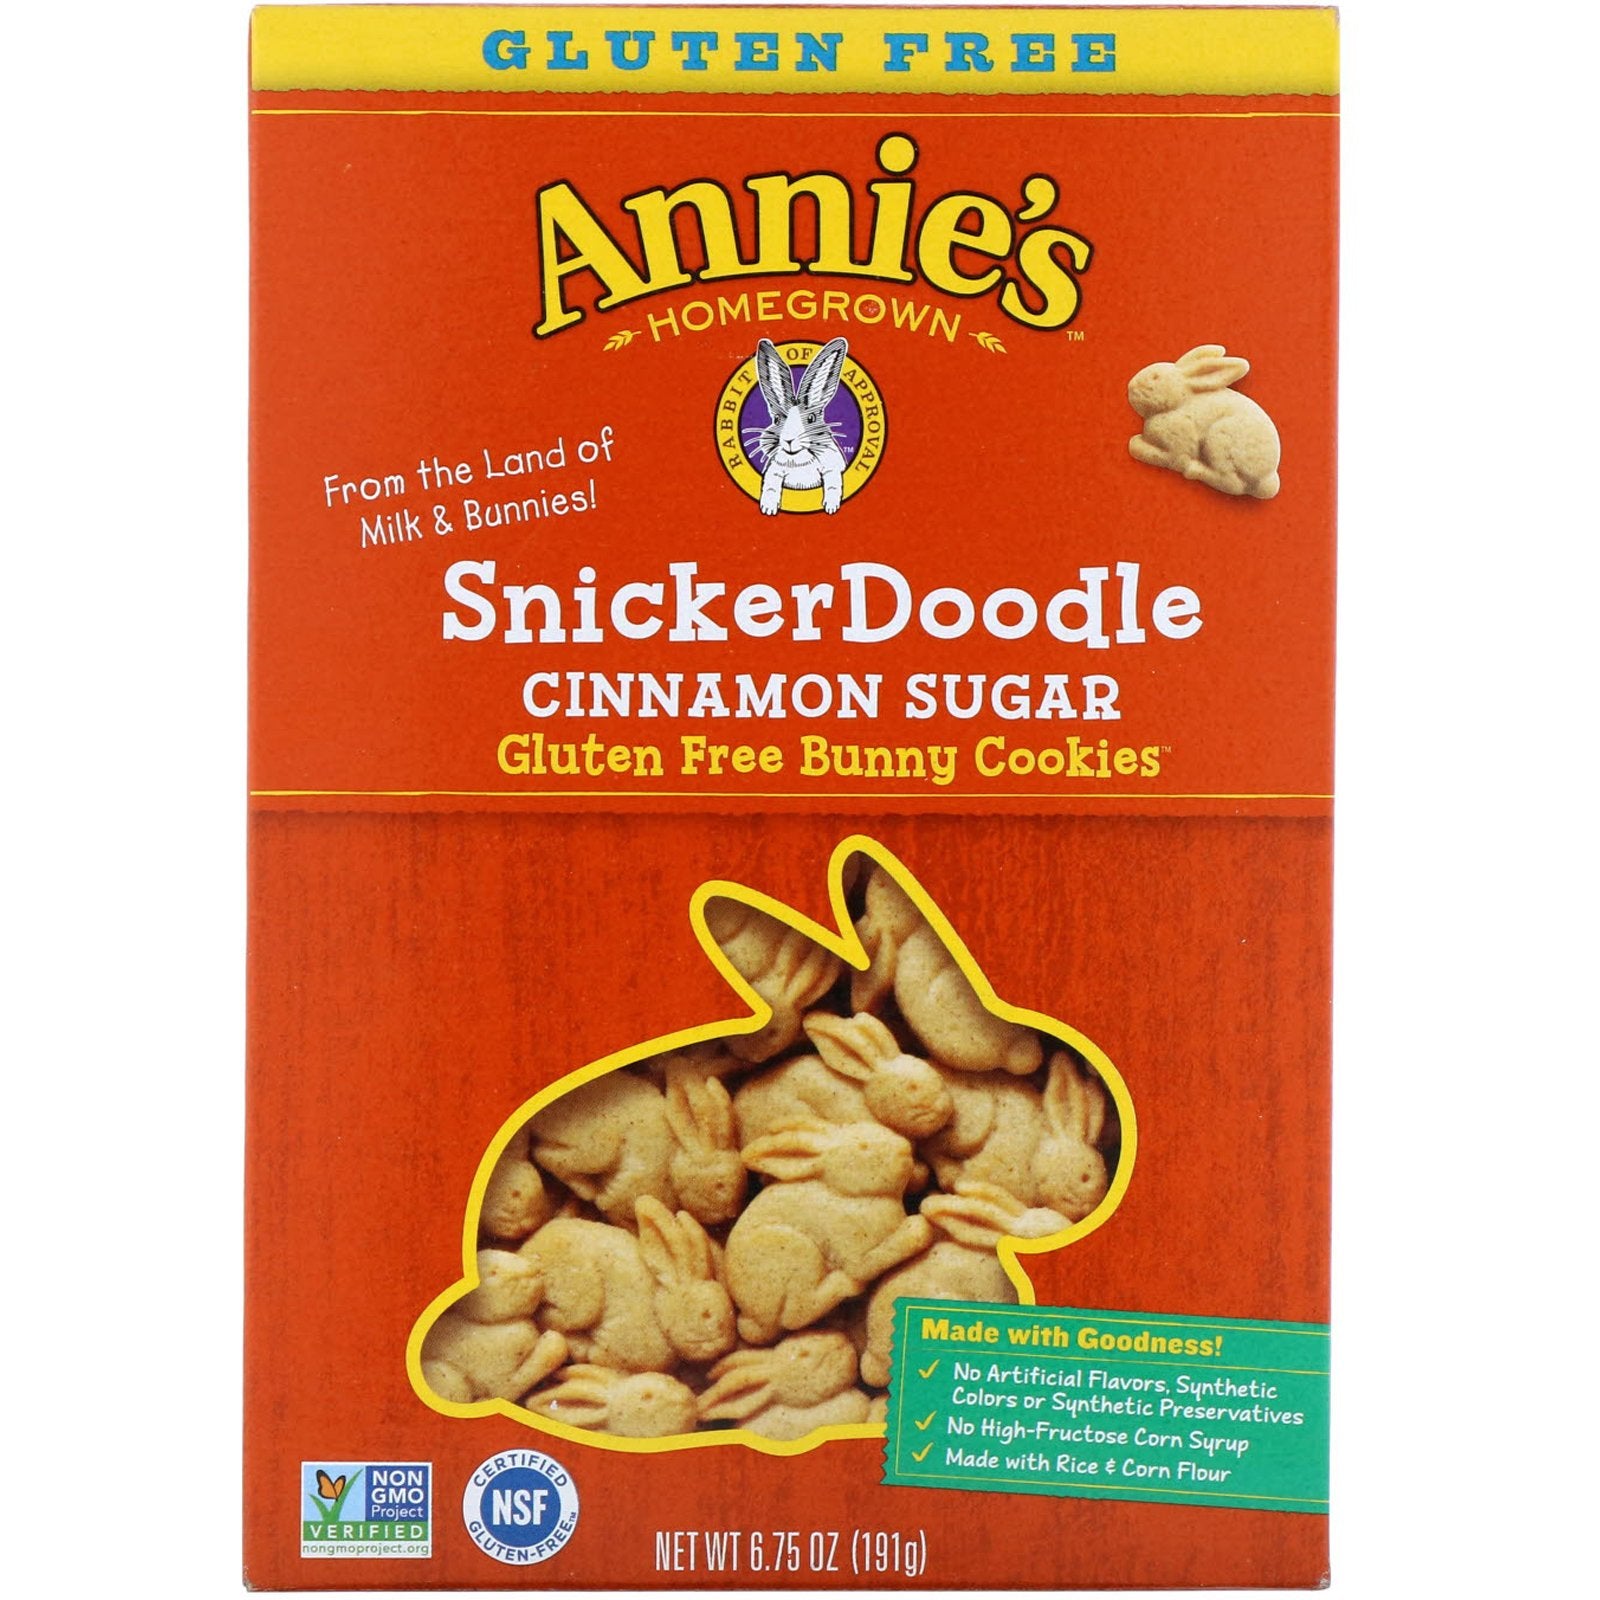 Annie's Homegrown, Gluten Free Bunny Cookies, SnickerDoodle, Cinnamon Sugar, 6.75 oz (191 g)